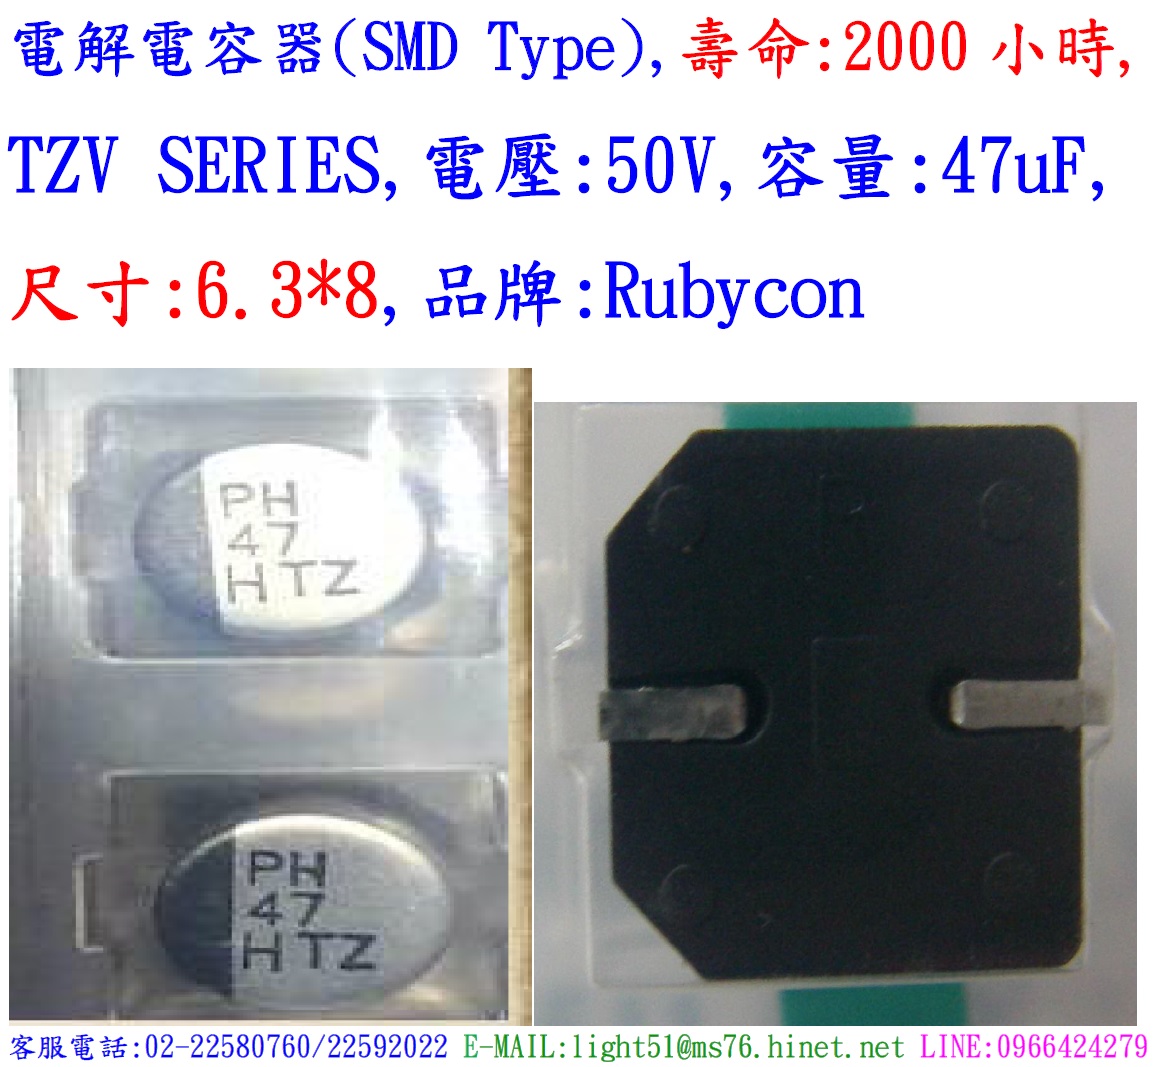 TZV,50V,47uF,尺寸6.3*8,電解電容器(LOW ESR),壽命2000小時,SMD Type,Rubycon(日本)